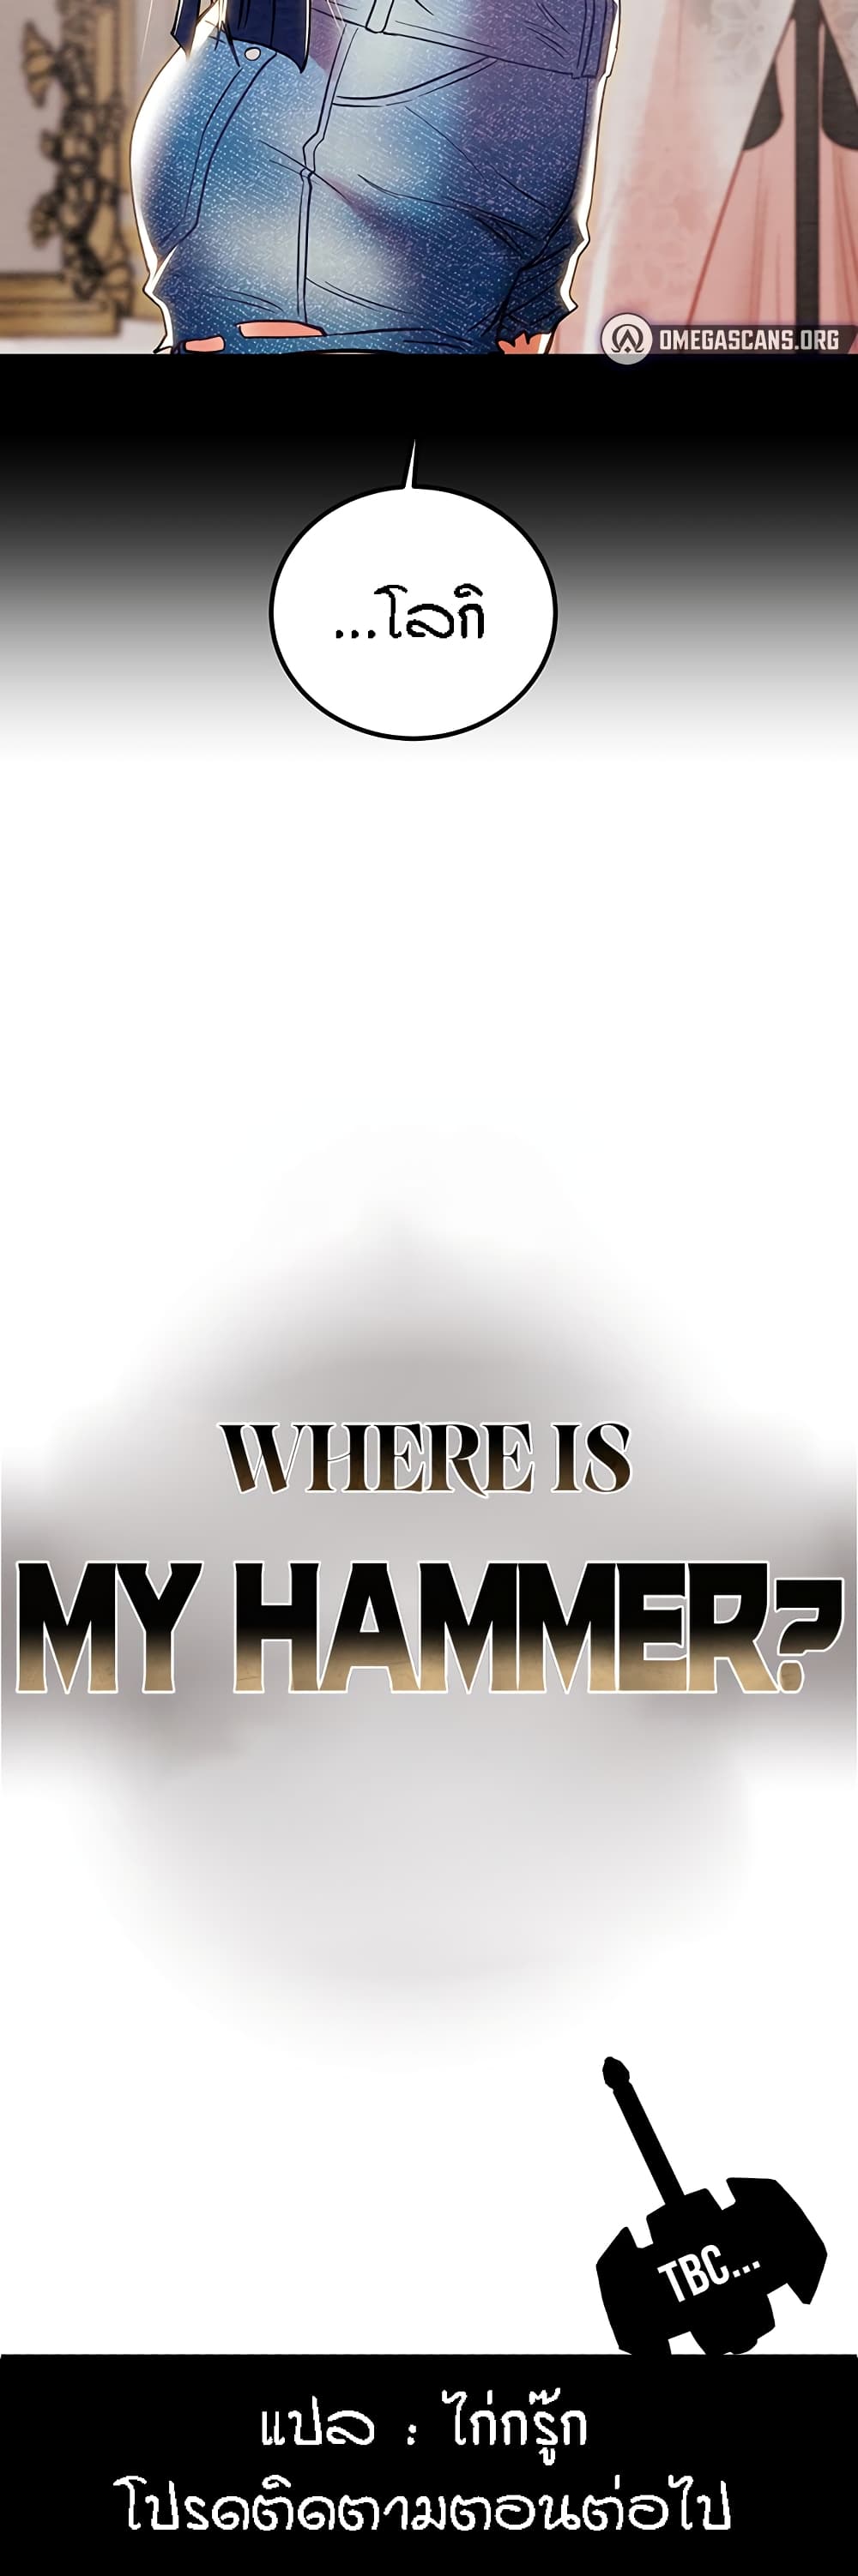 Where Did My Hammer Go? 40-40